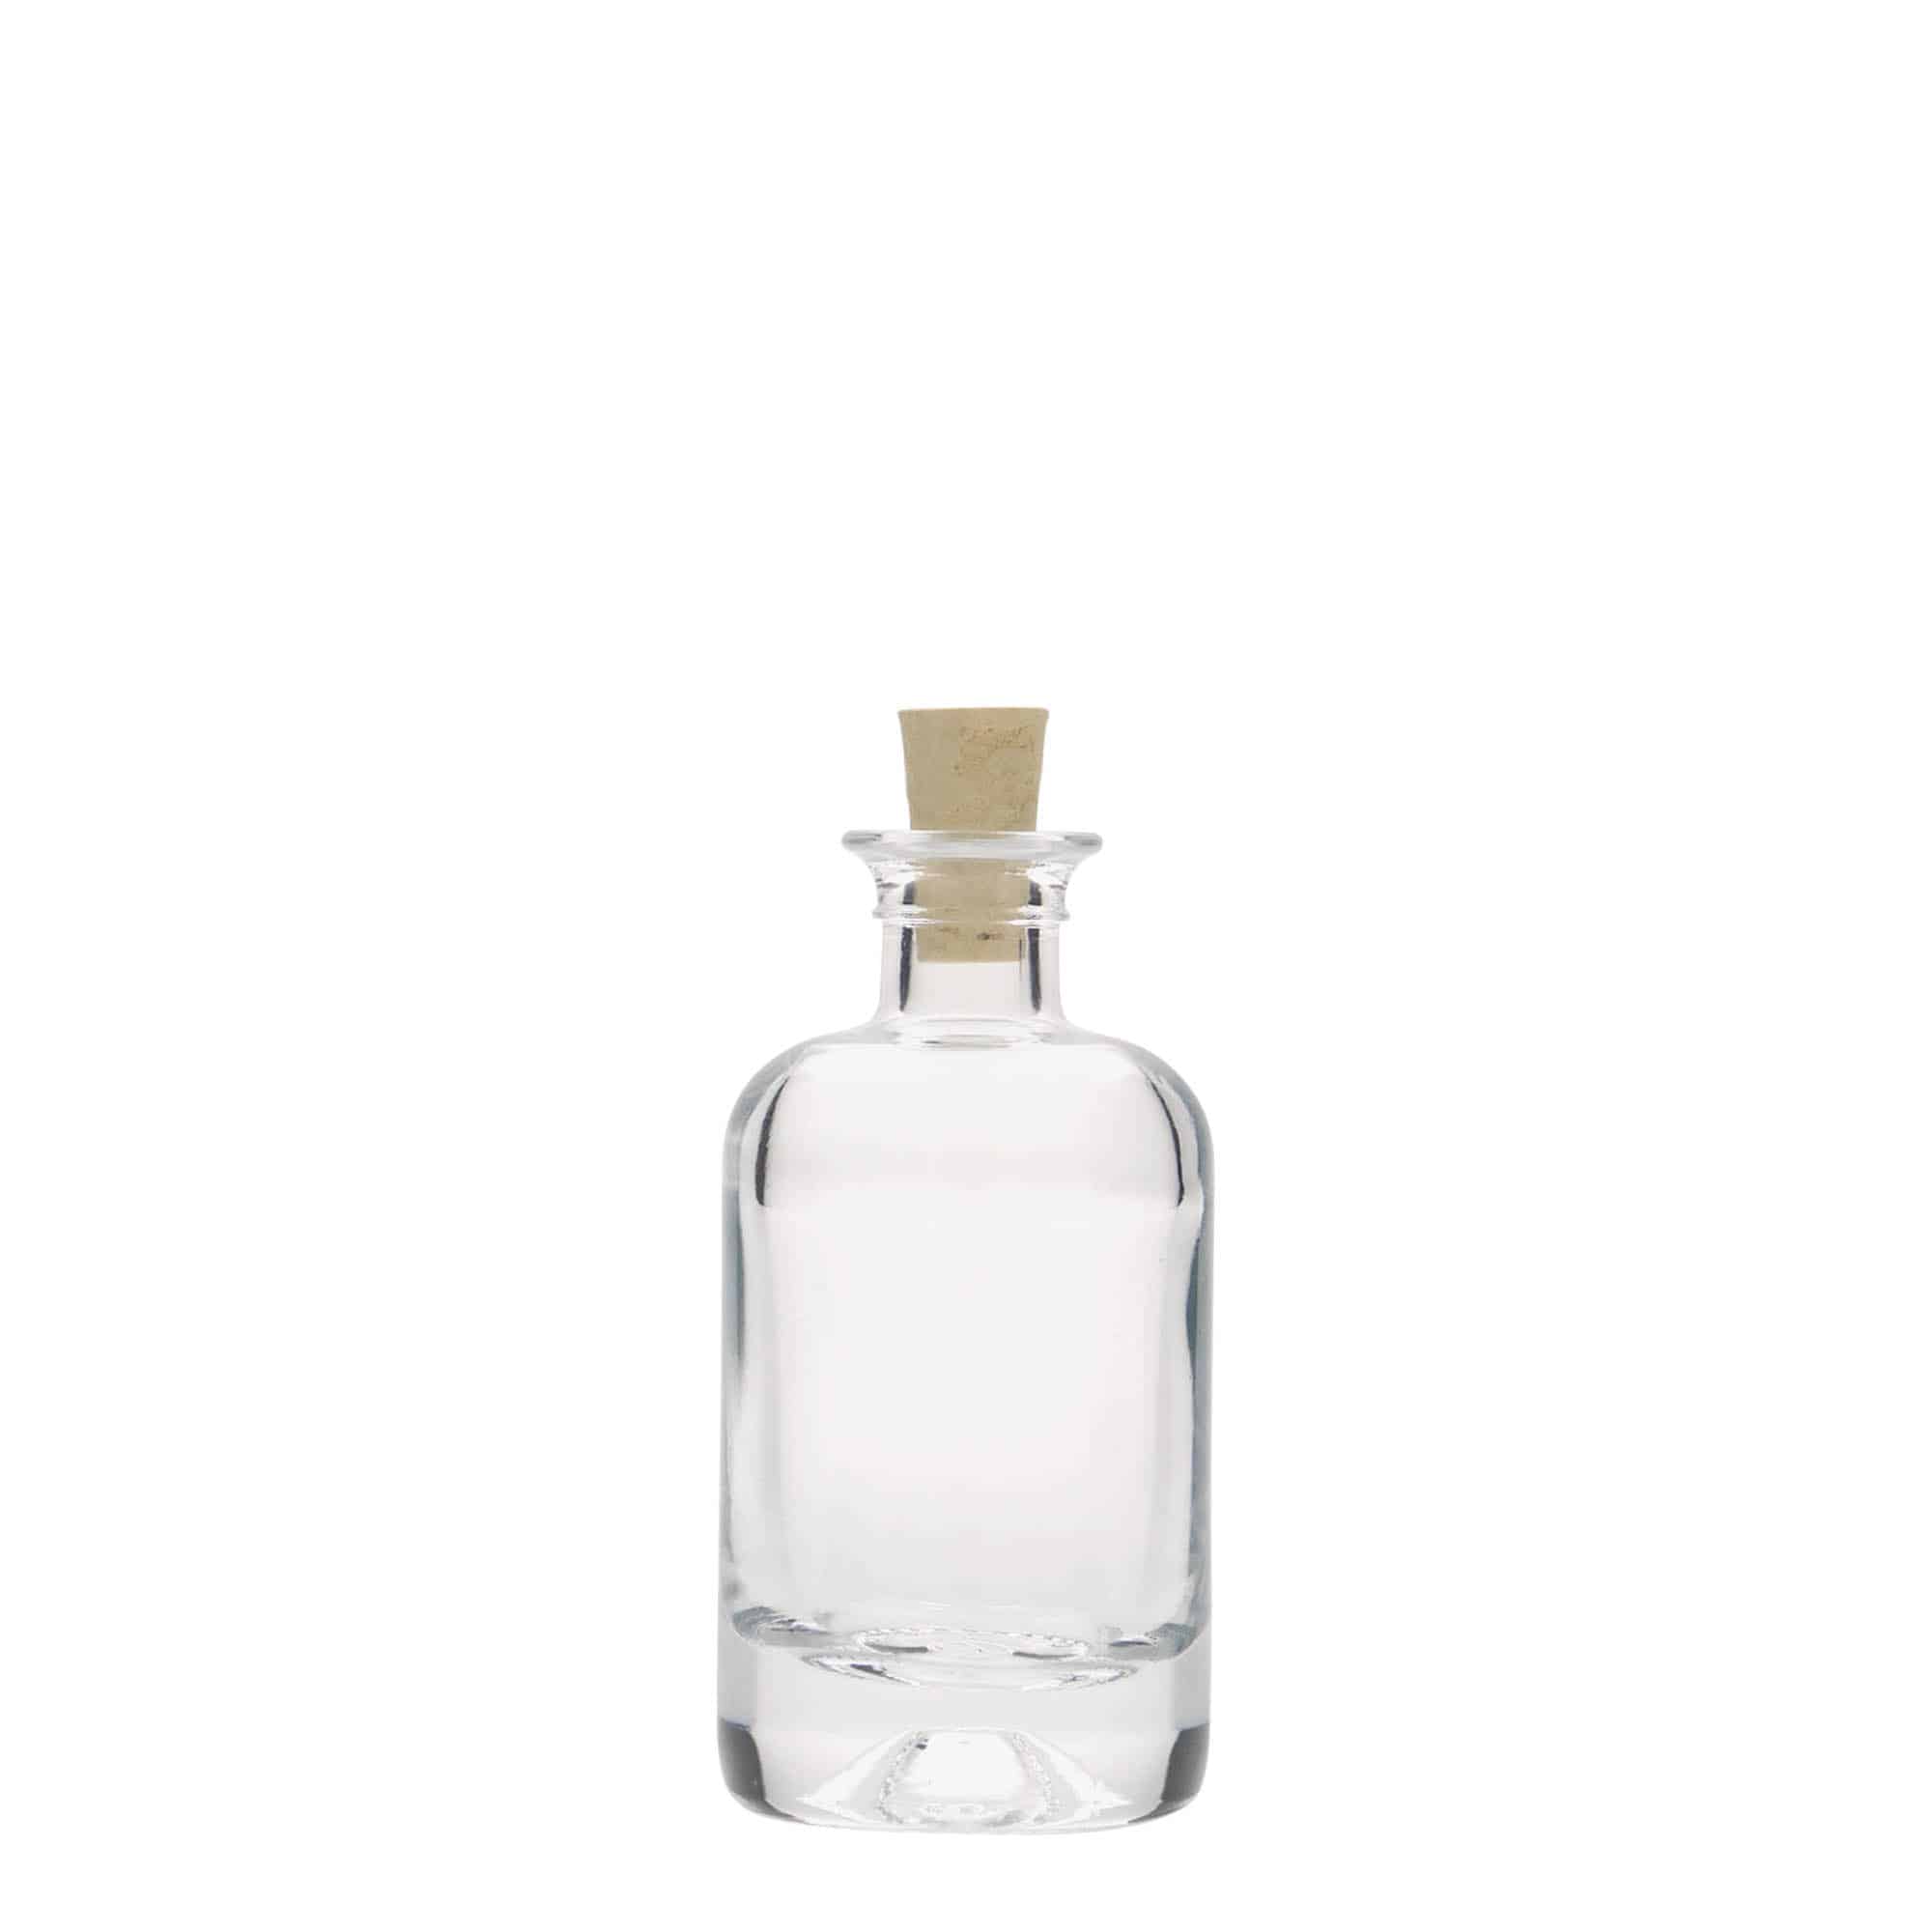 40 ml glass apothecary bottle, closure: cork